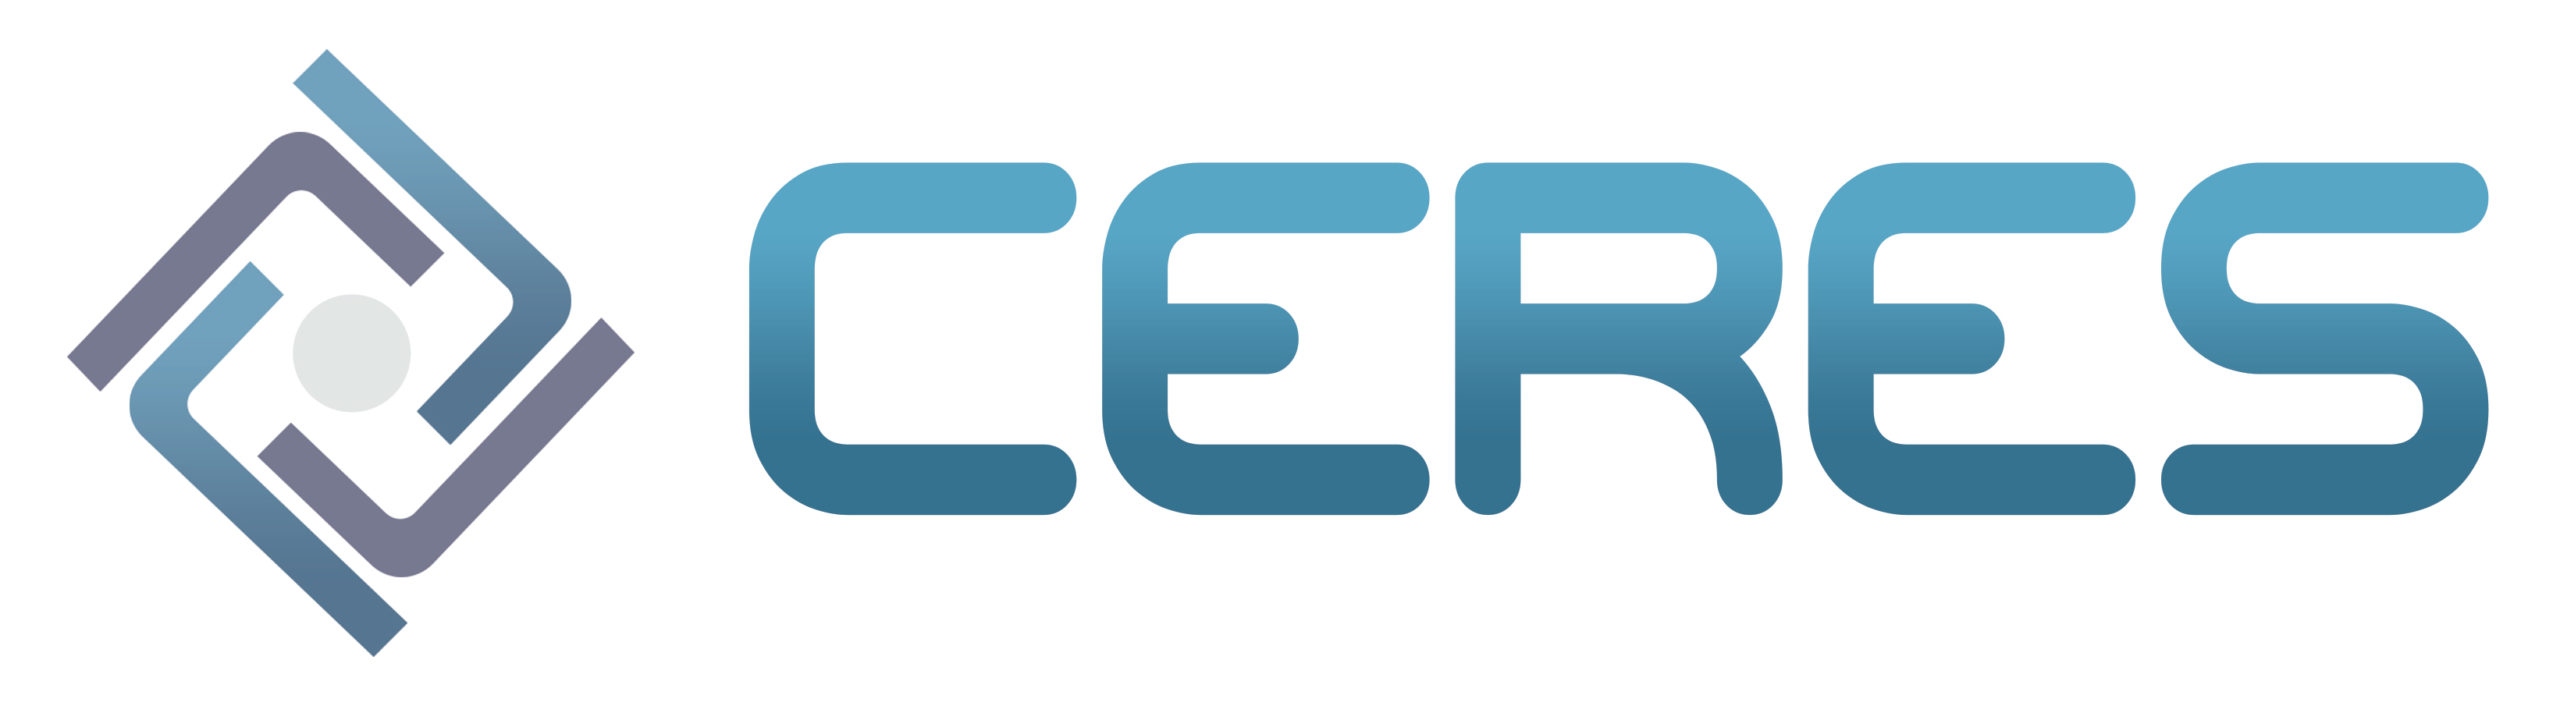 Ceres Technology Advisors Inc